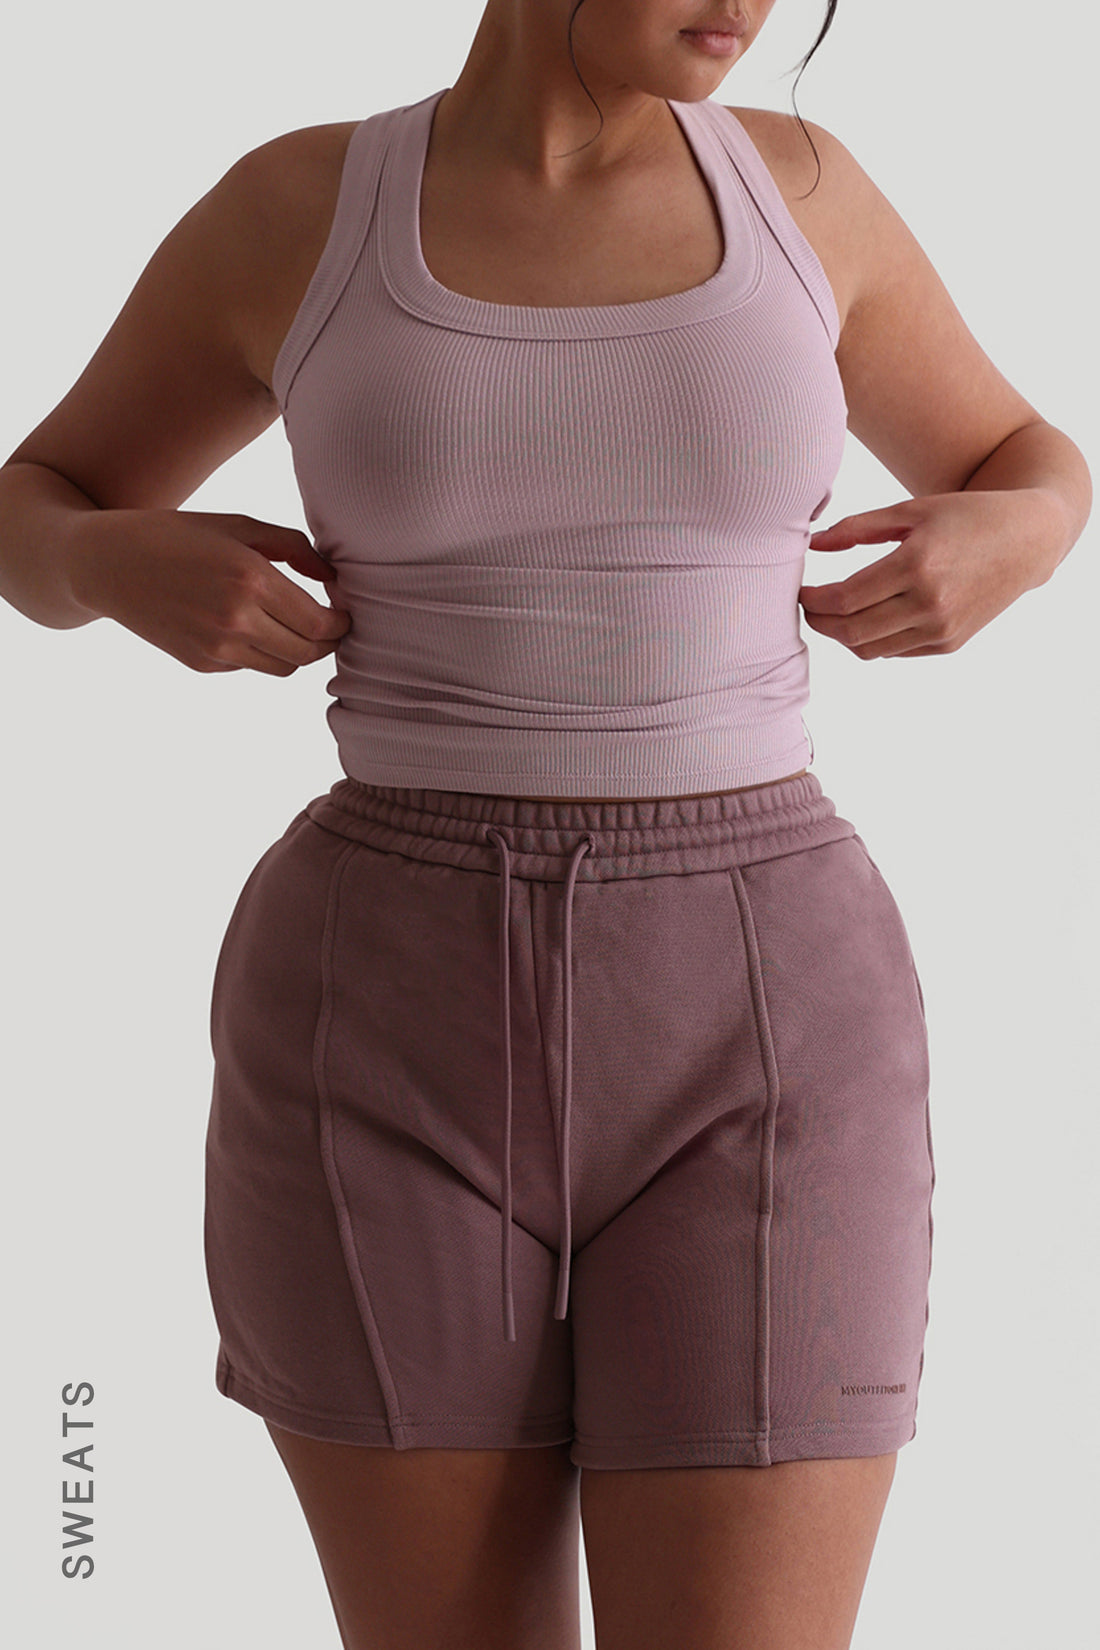 Structured Shorts 4 1/2" - Vintage Purple